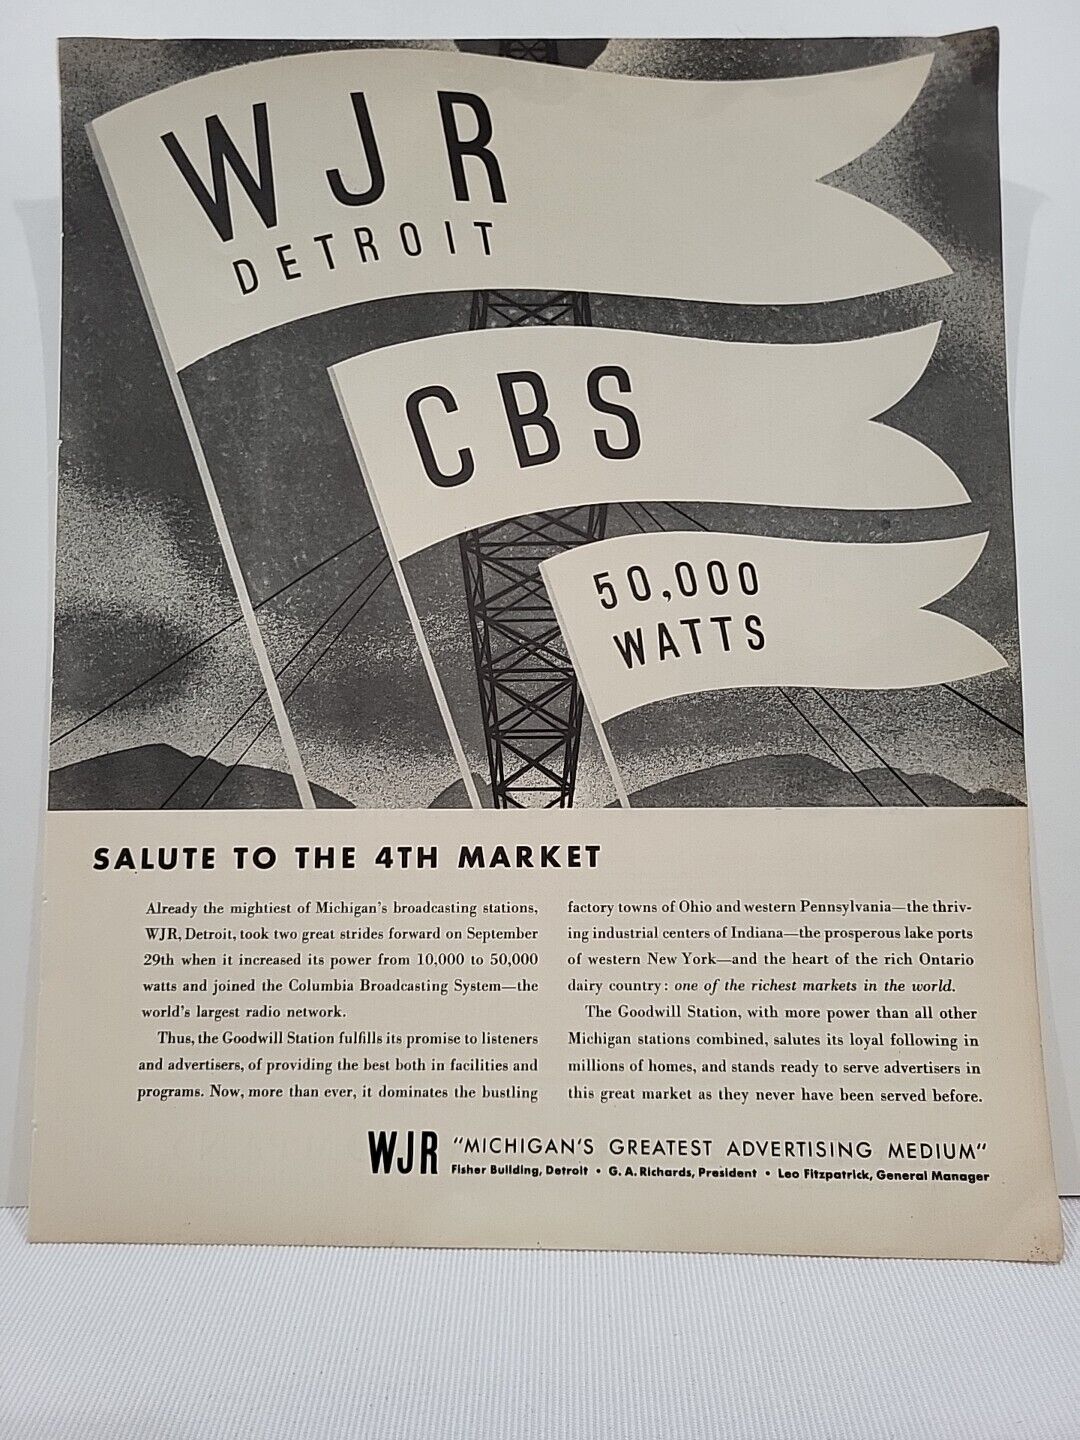 1935 WJR Detroit Radio Fortune Magazine Print Advertising Flags Tower Michigan